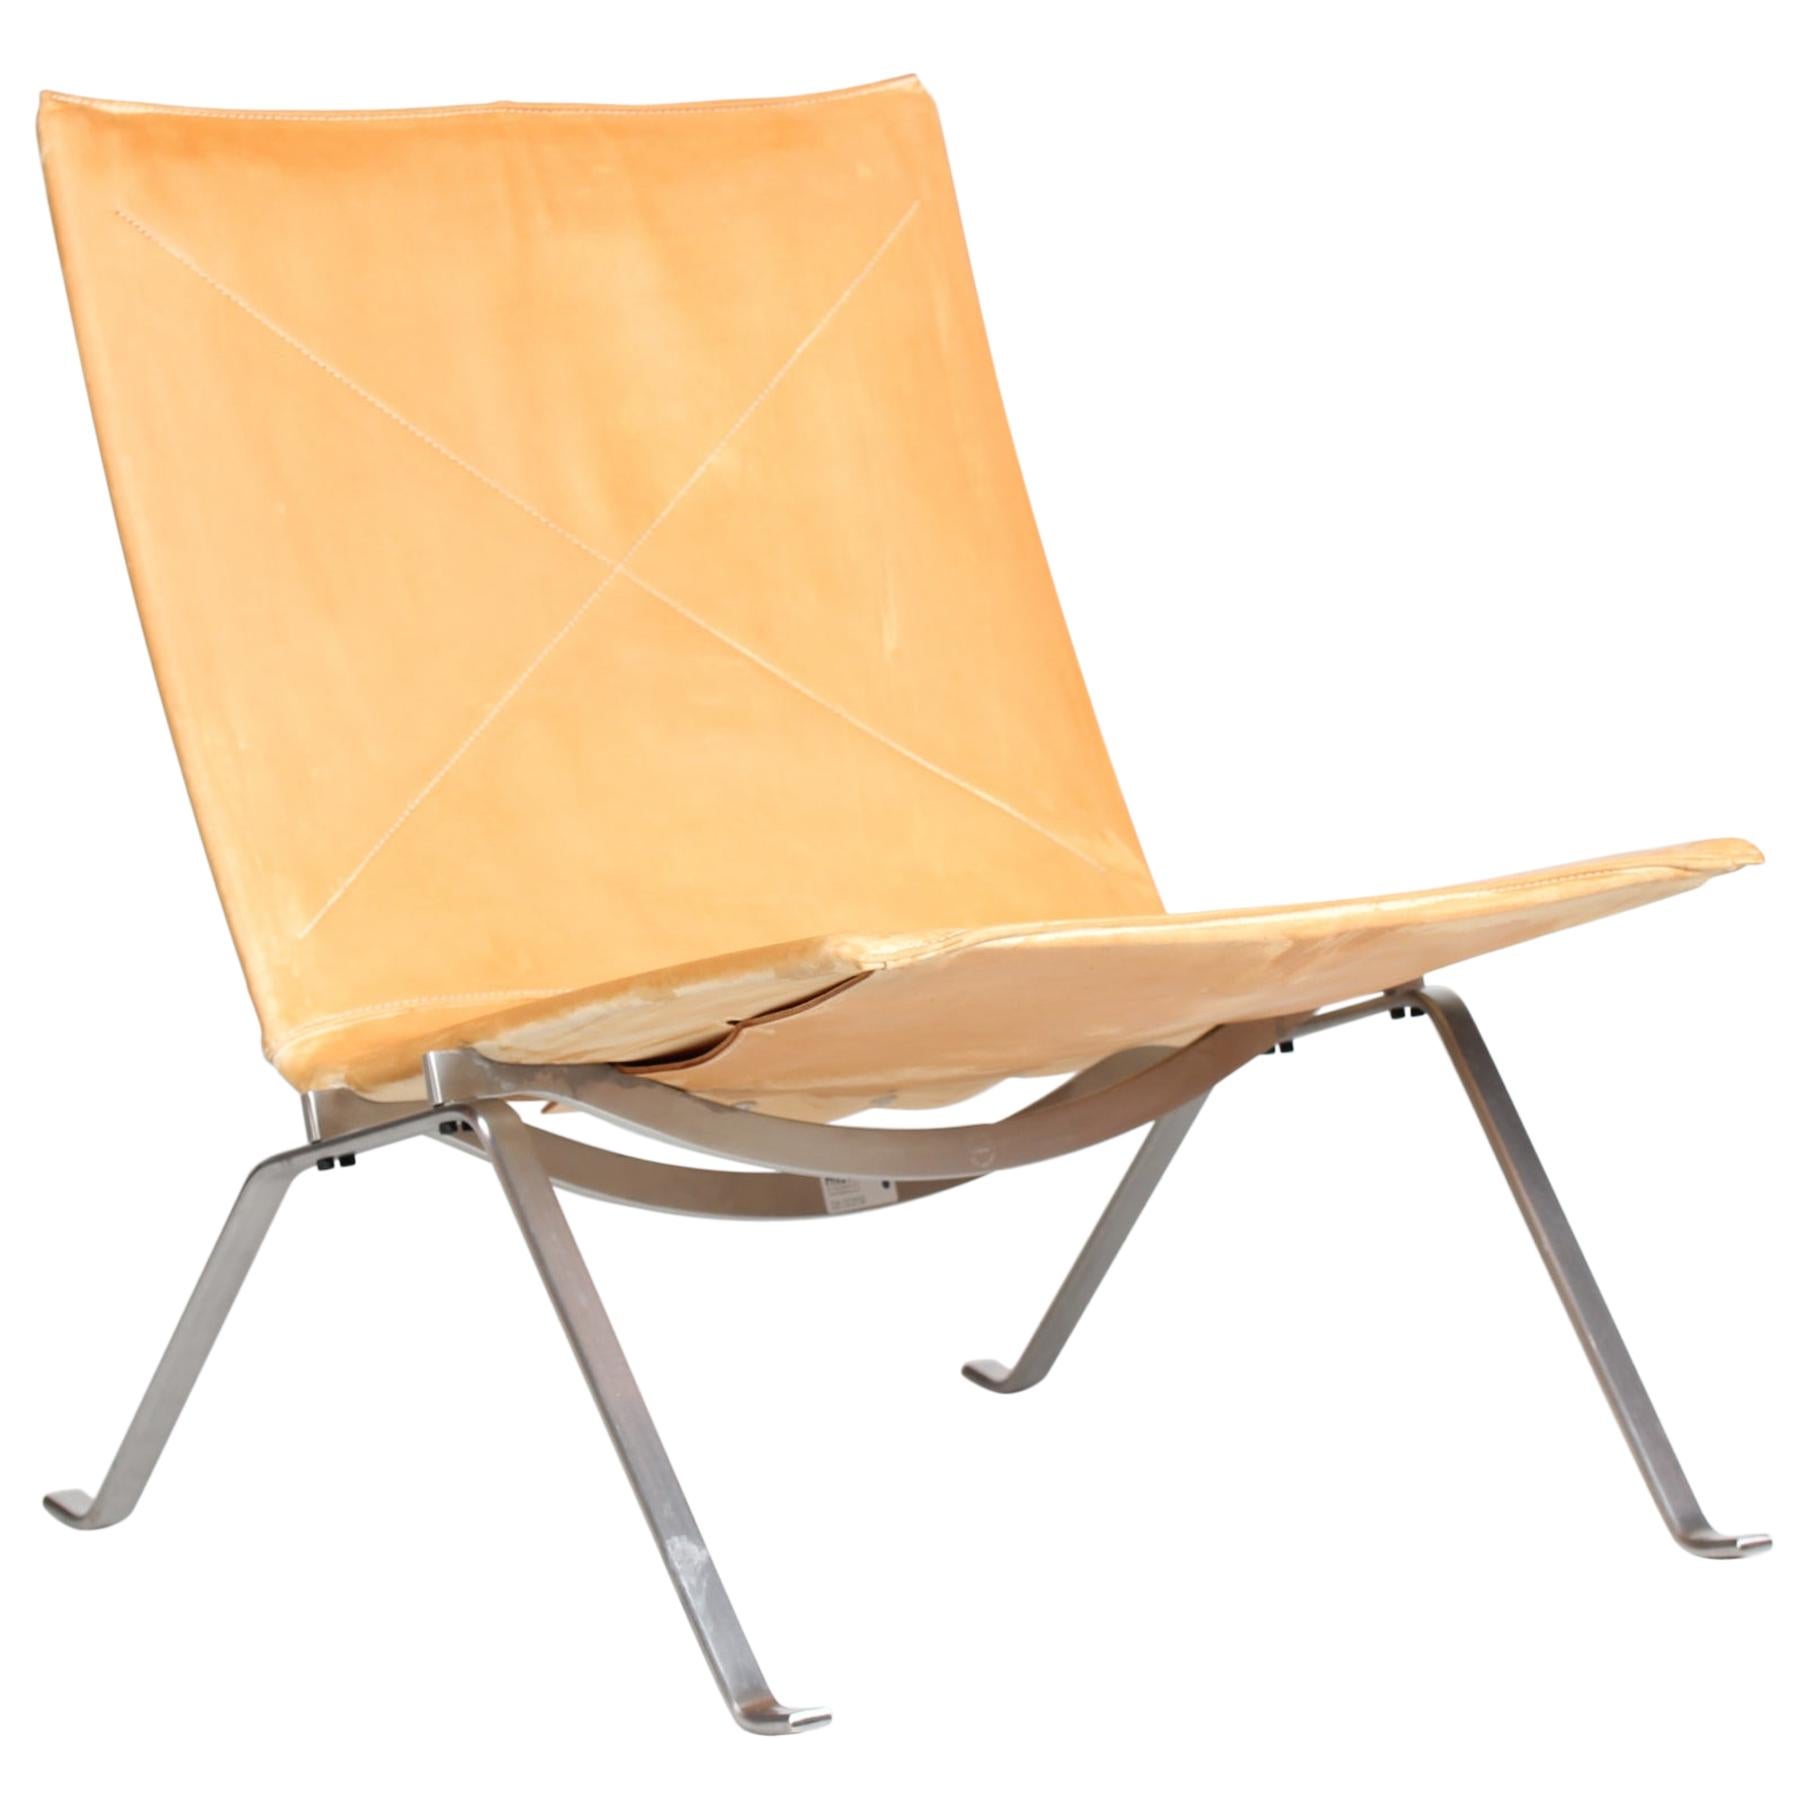 Poul Kjærholm PK 22 Lounge Chair with Cognac Leather by Fritz Hansen, 2001